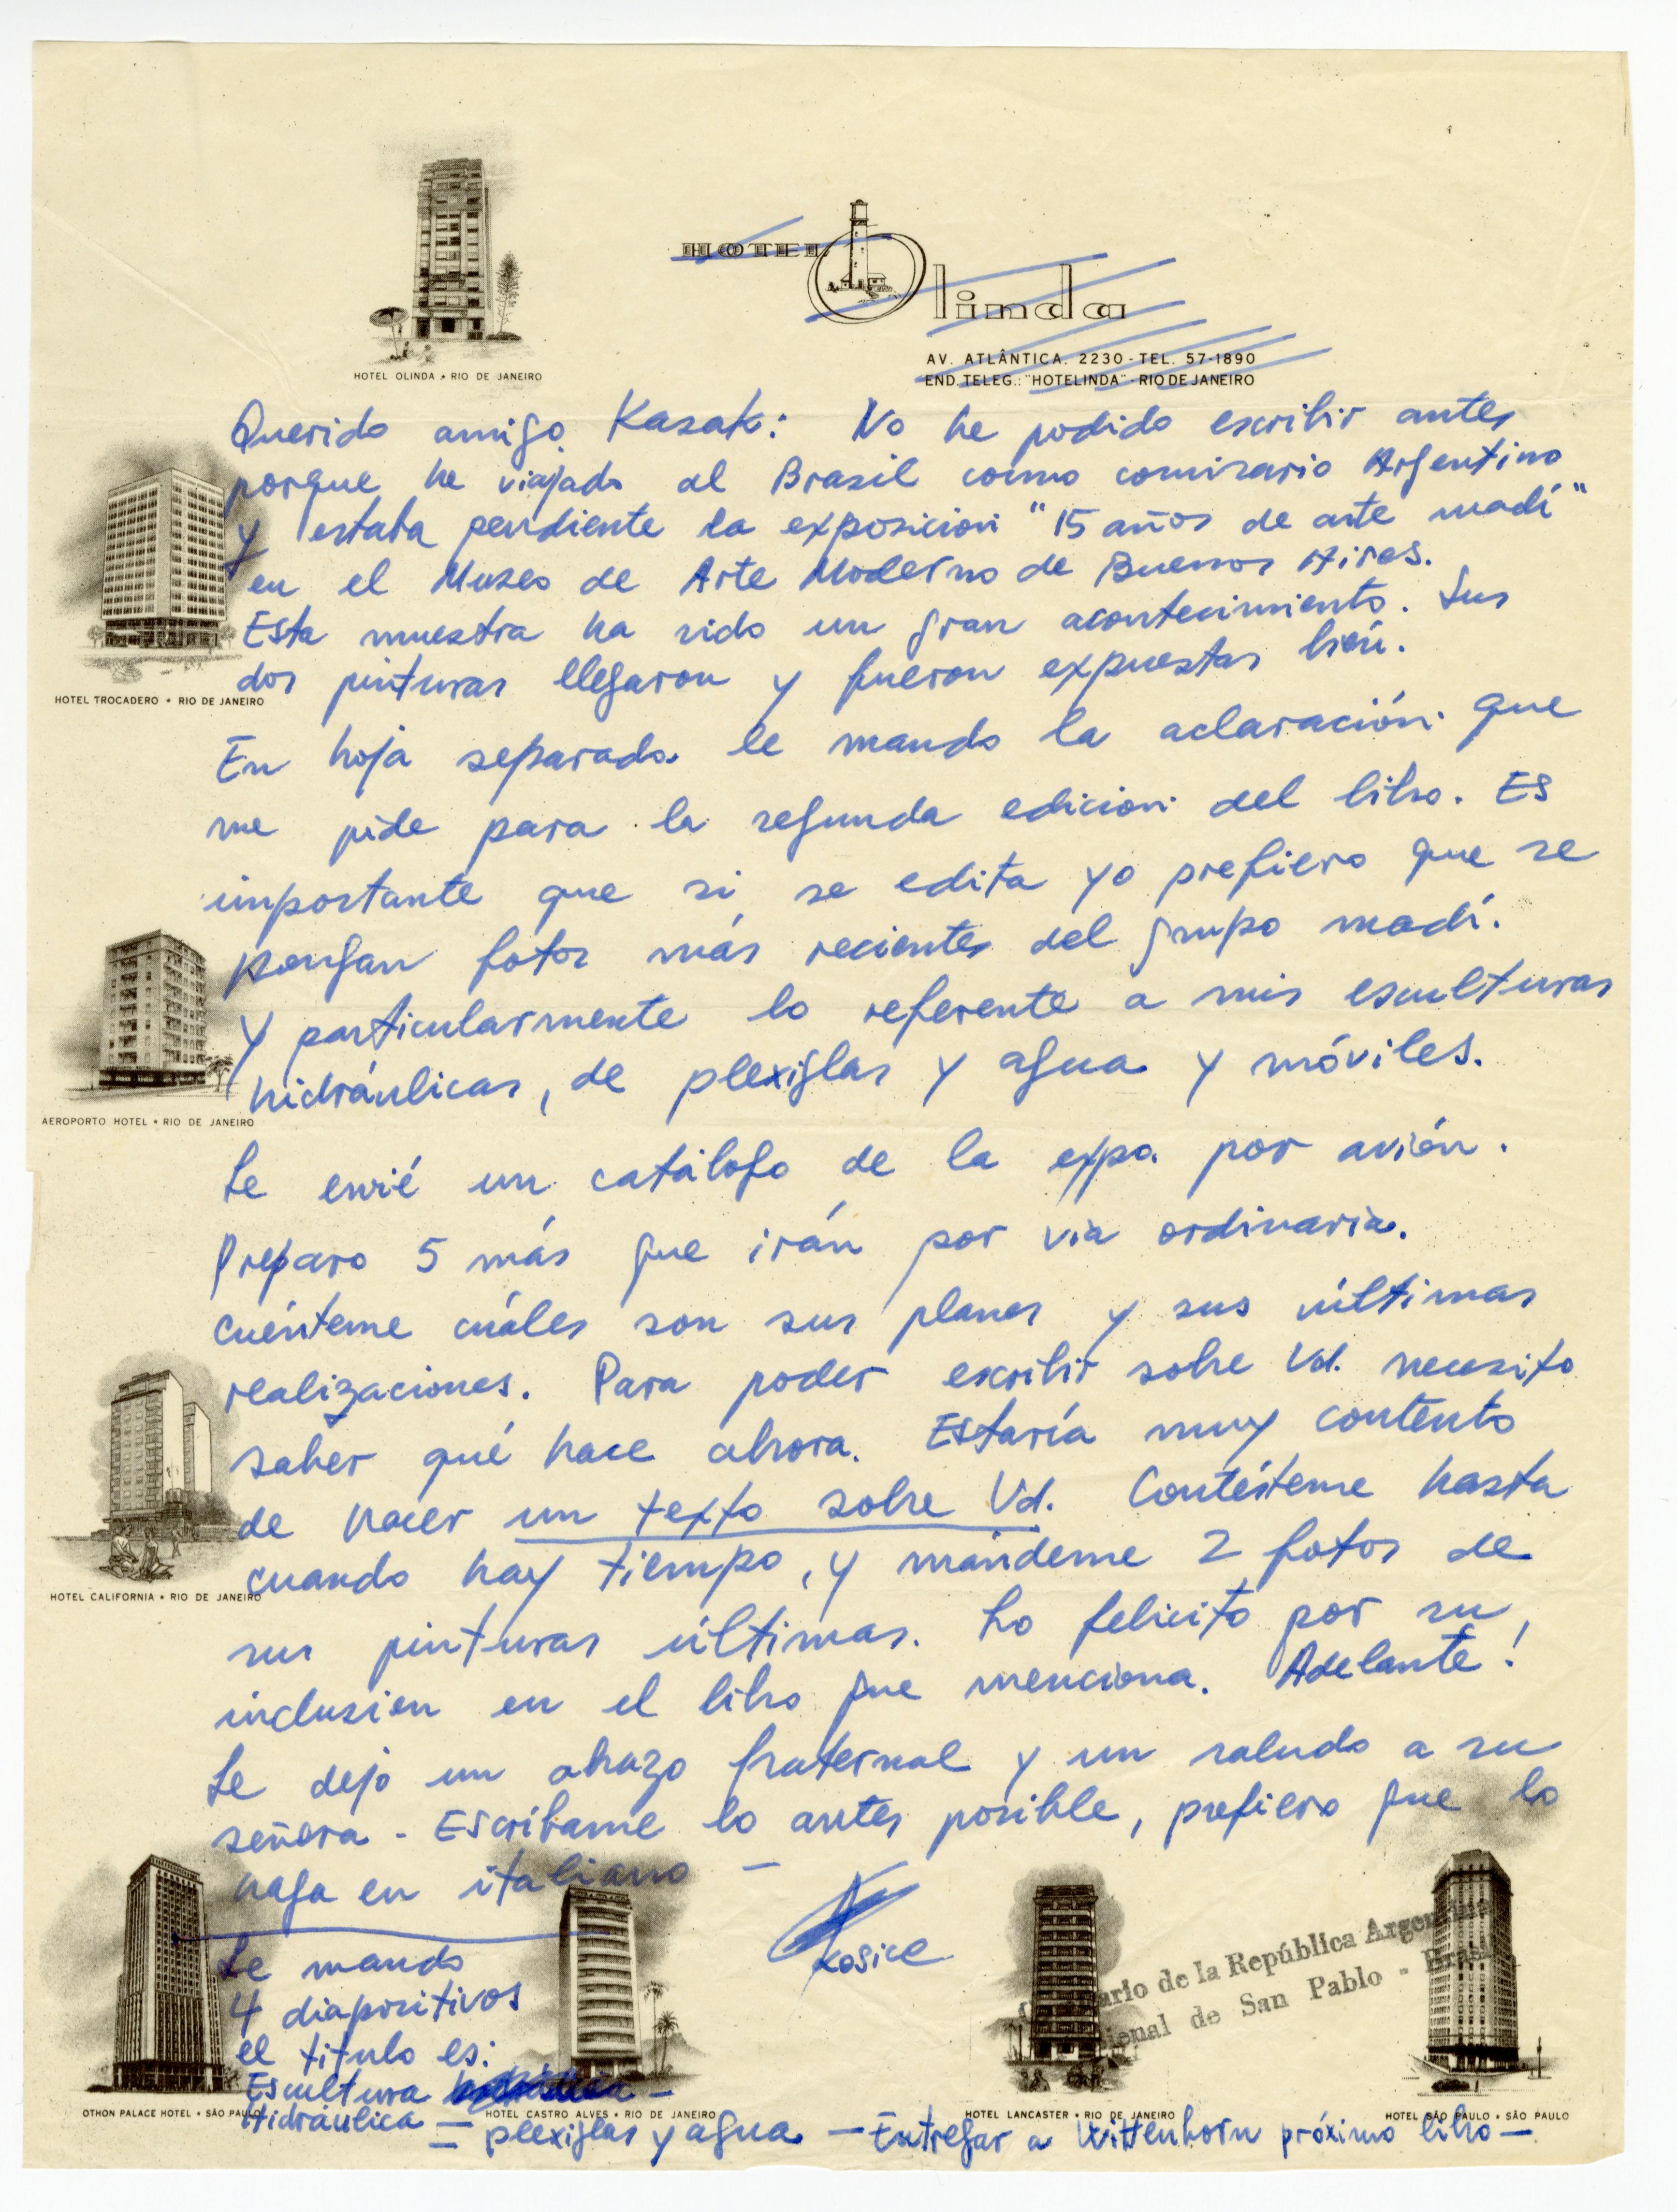 Hand-written letter on hotel letterhead paper